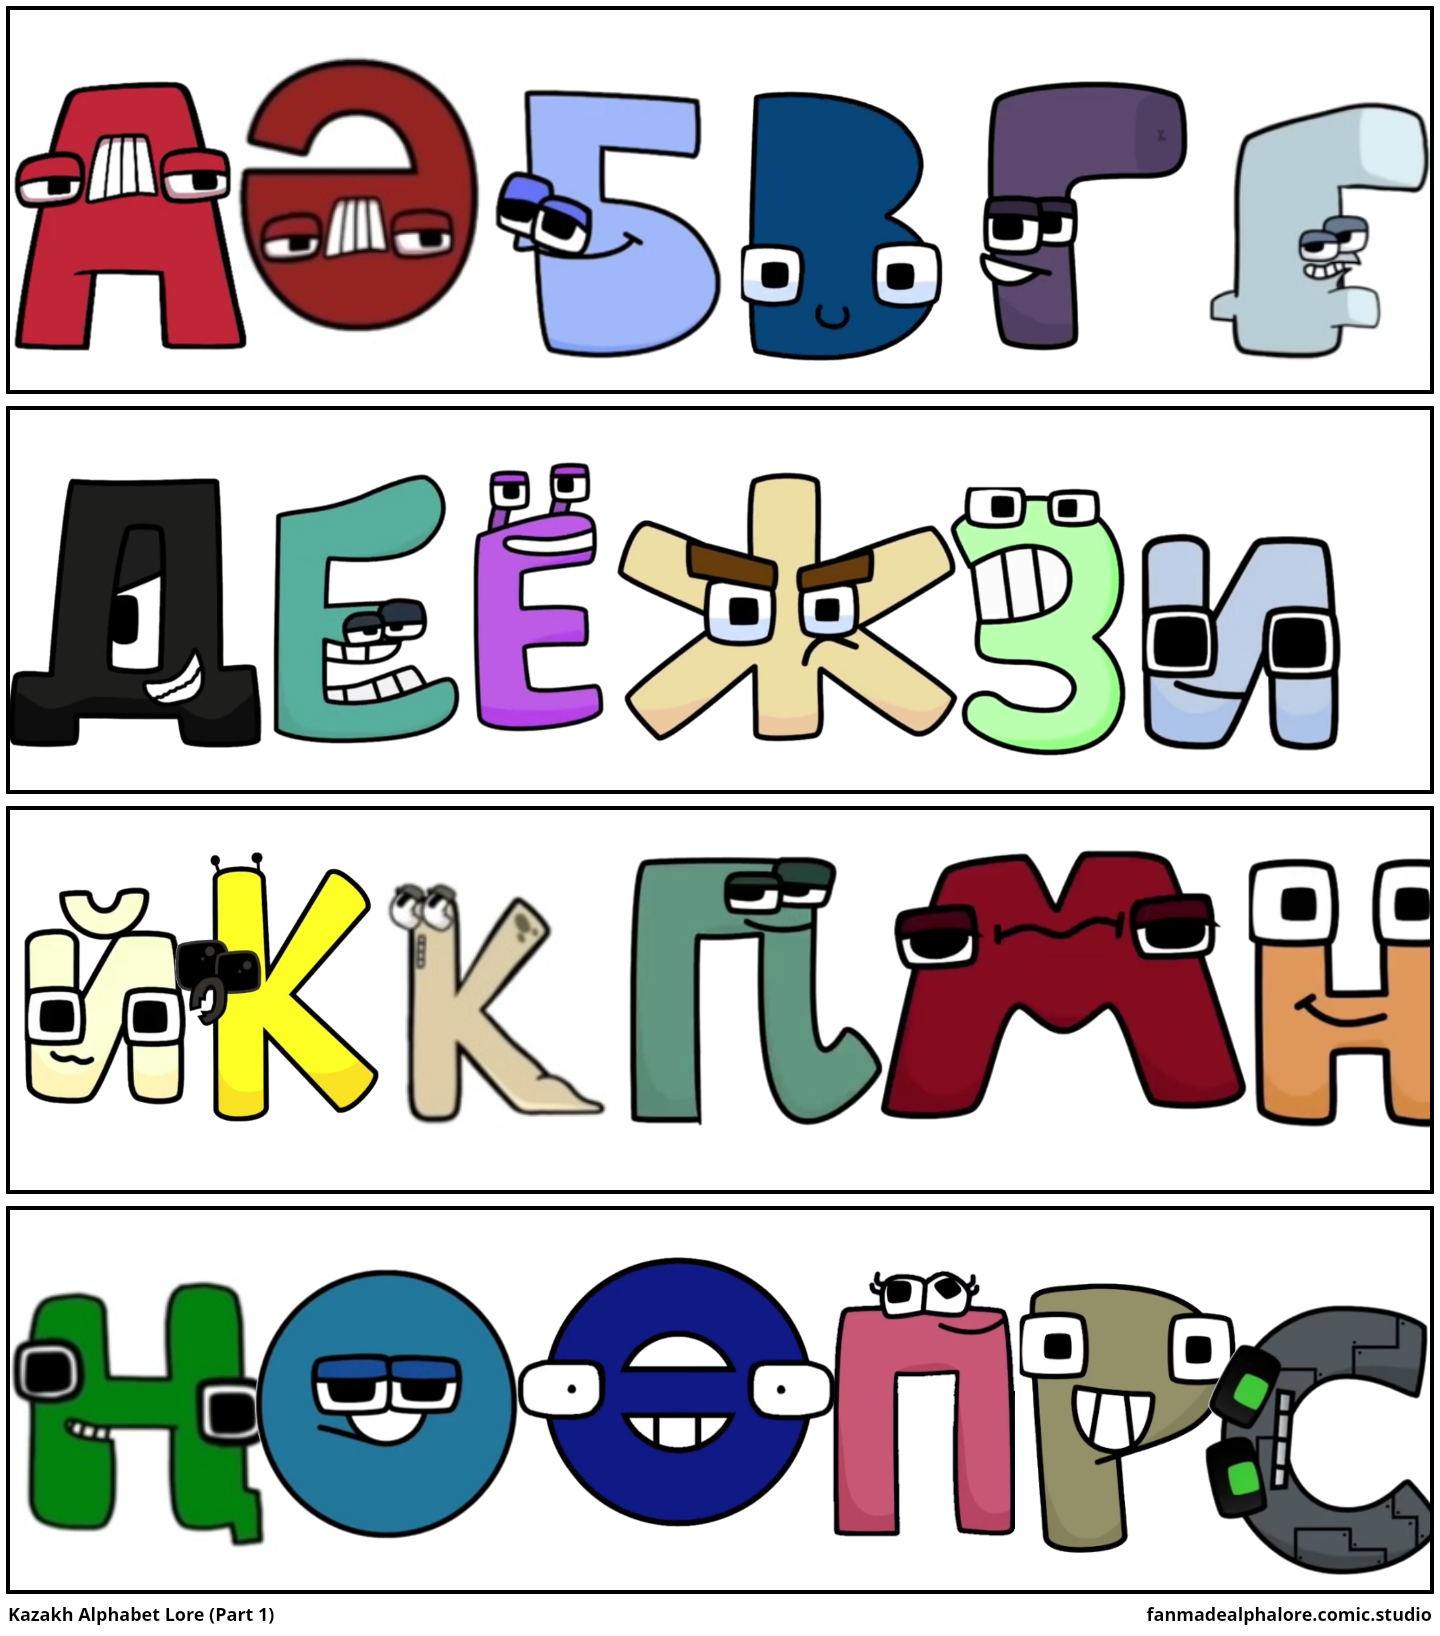 Kazakh Alphabet Lore Designs (Part 1) - Comic Studio